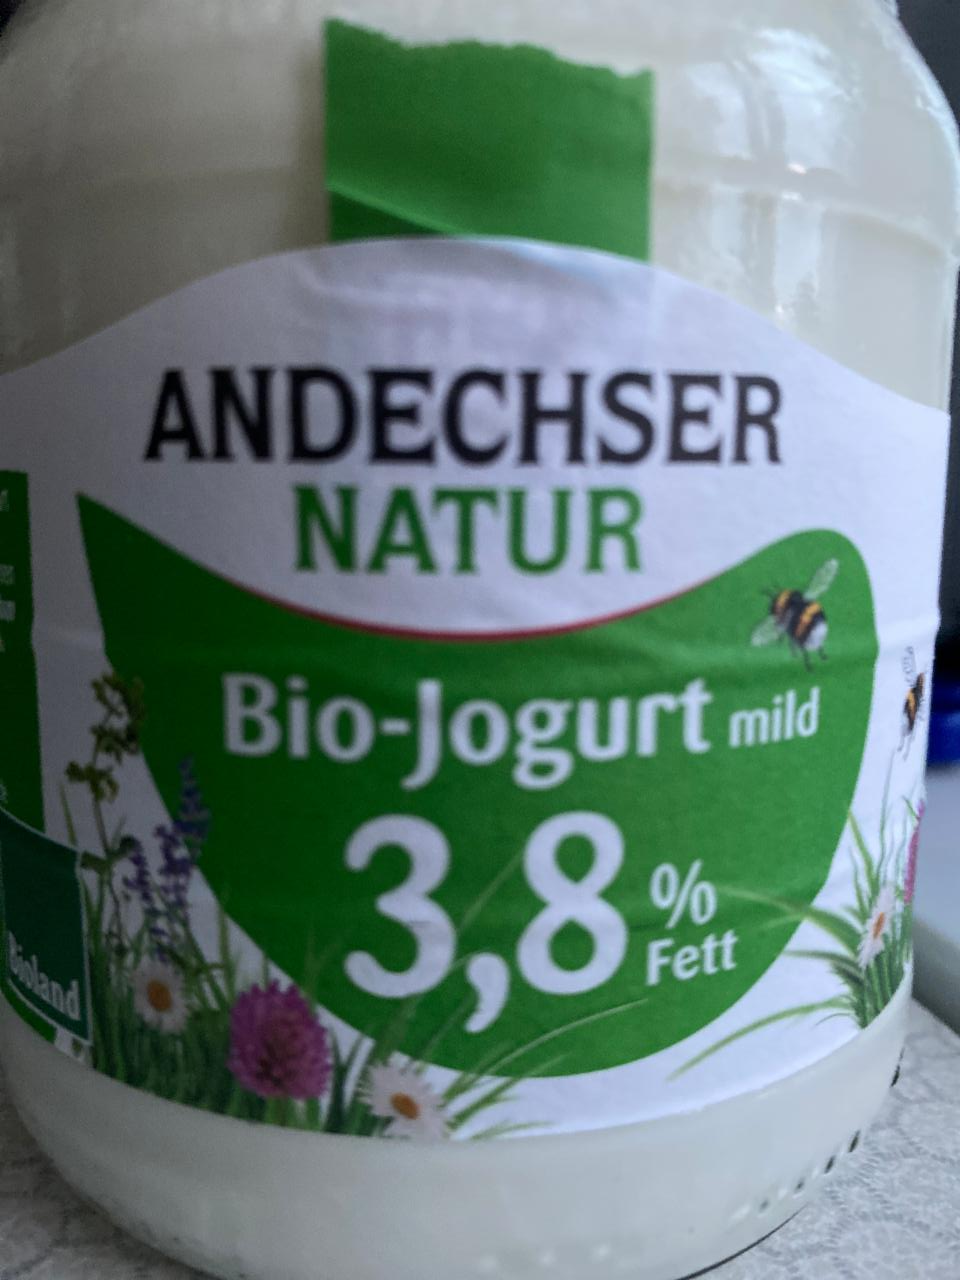 Фото - Bio Joghurt mild 3.8% Andechser Natur